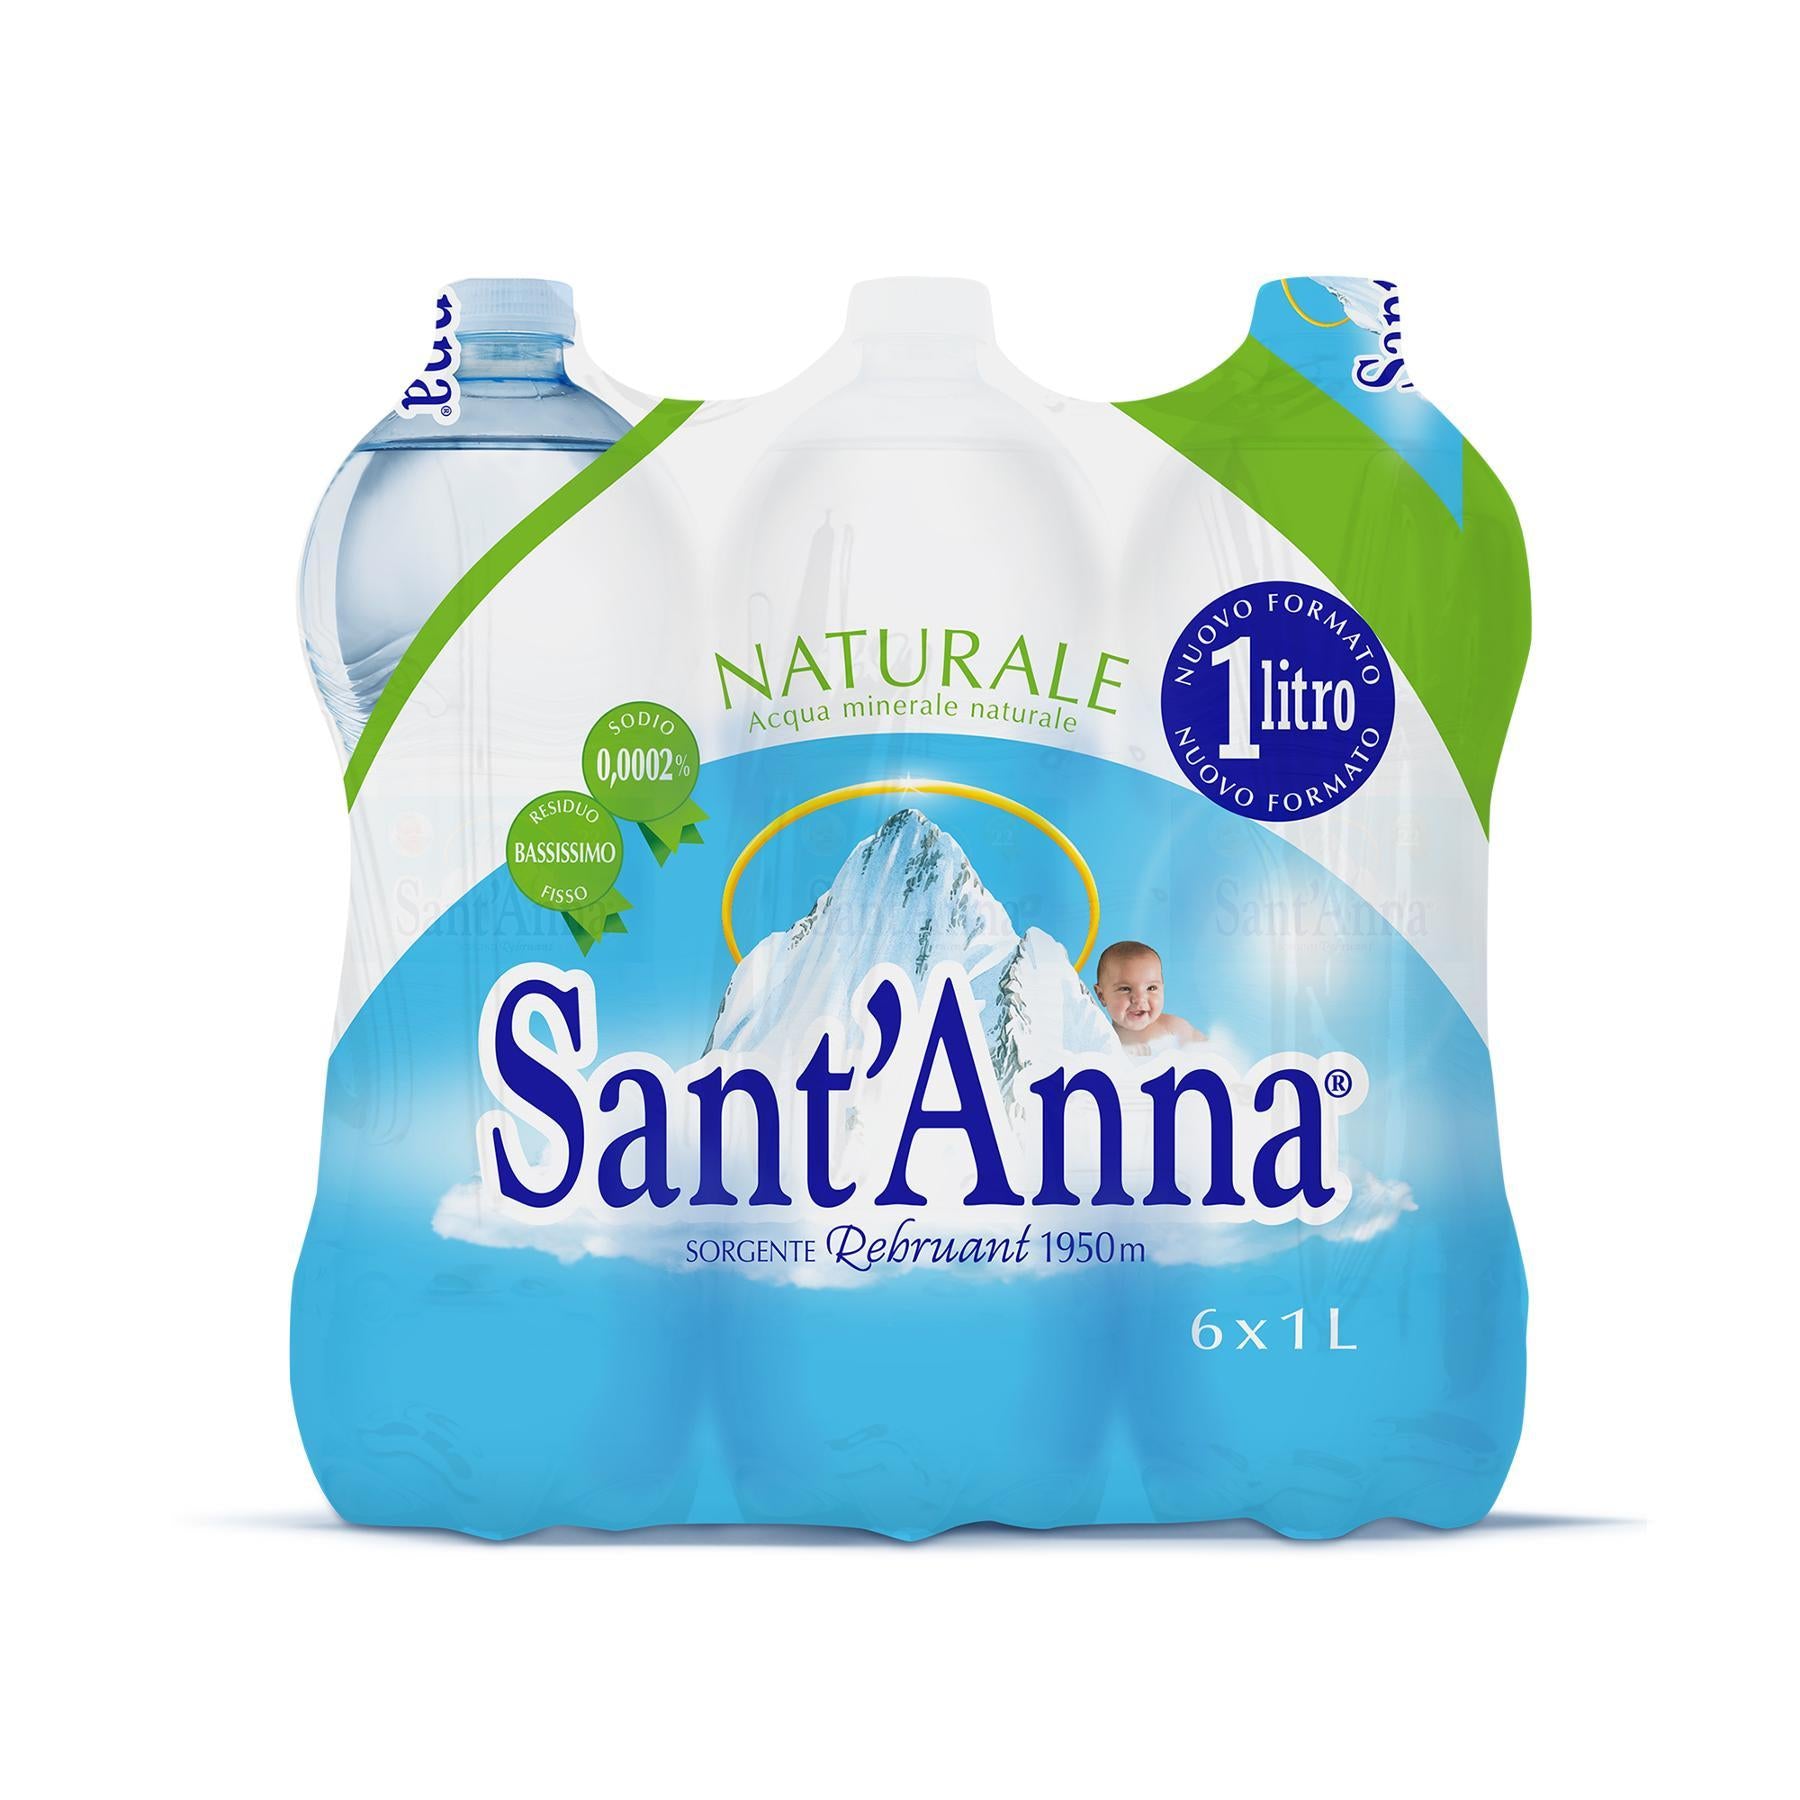 Sant Anna Water - Order Online in Dubai & UAE